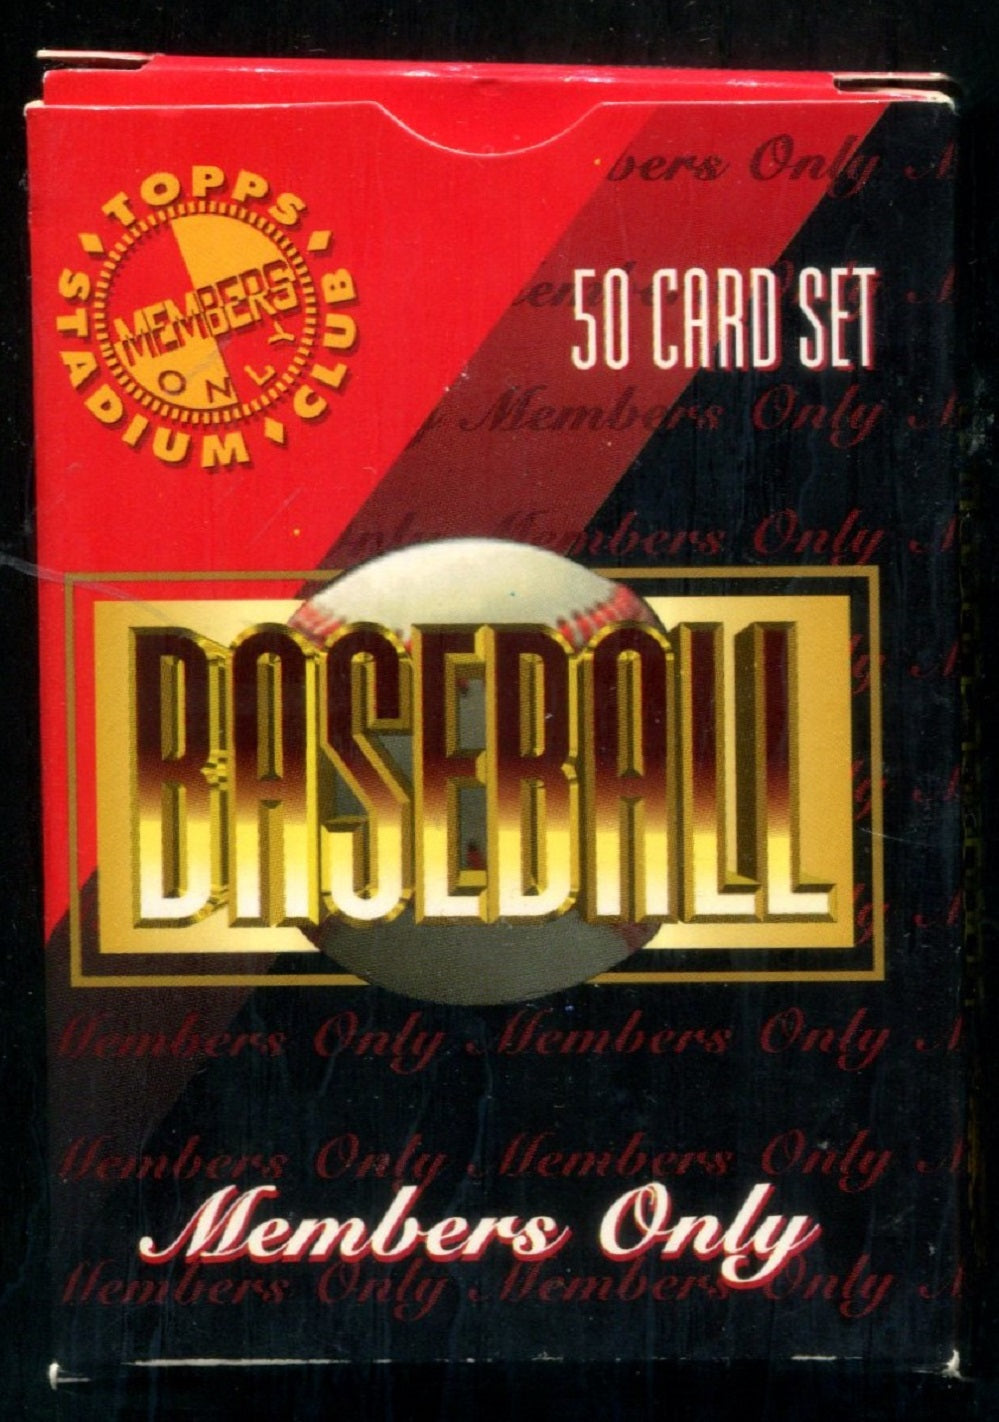 1996 Topps Stadium Club Baseball Members Only Factory Set (50)